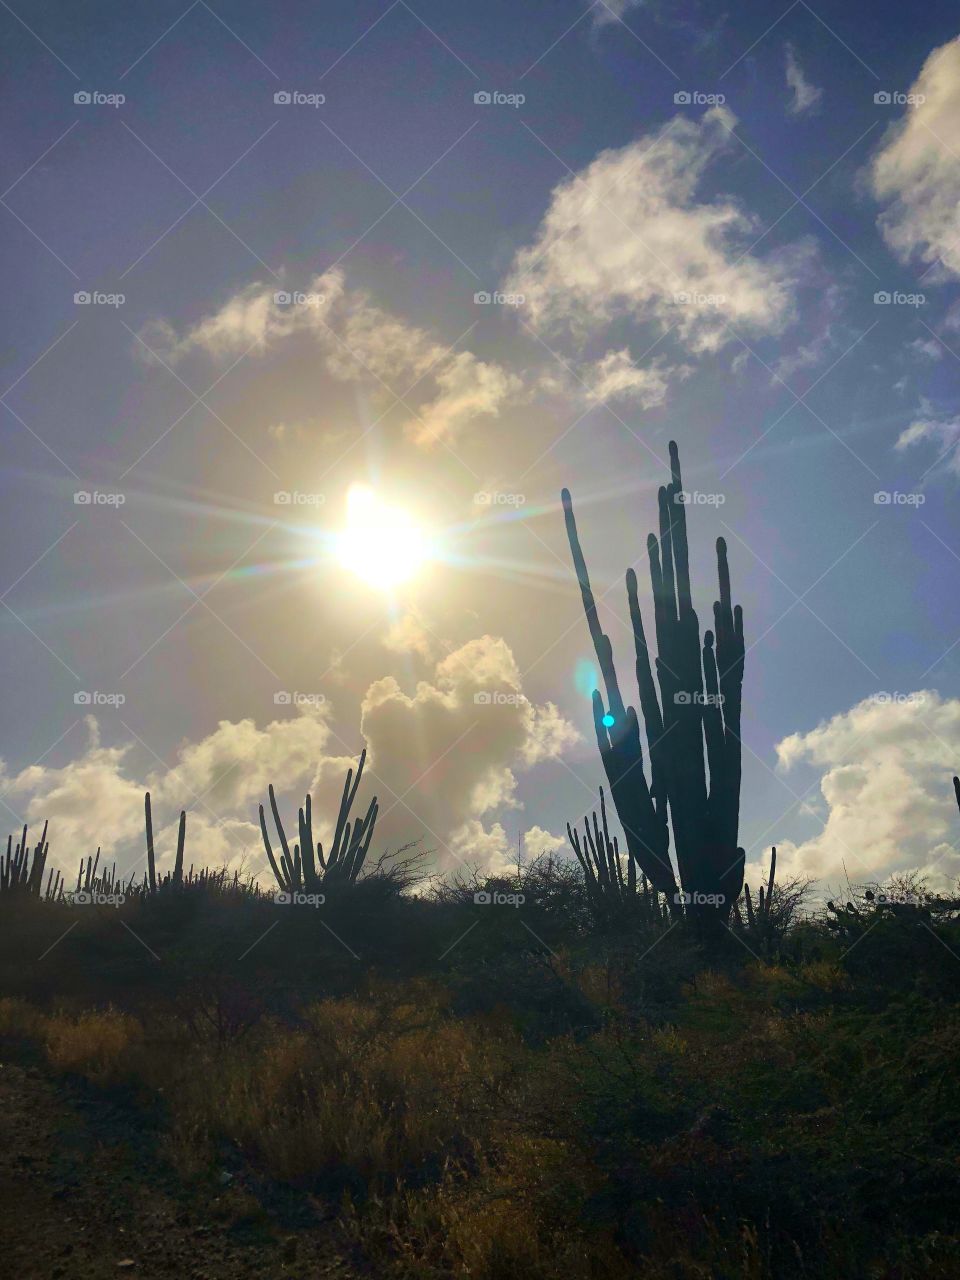 Cactus on a sunny day in Aruba 2018